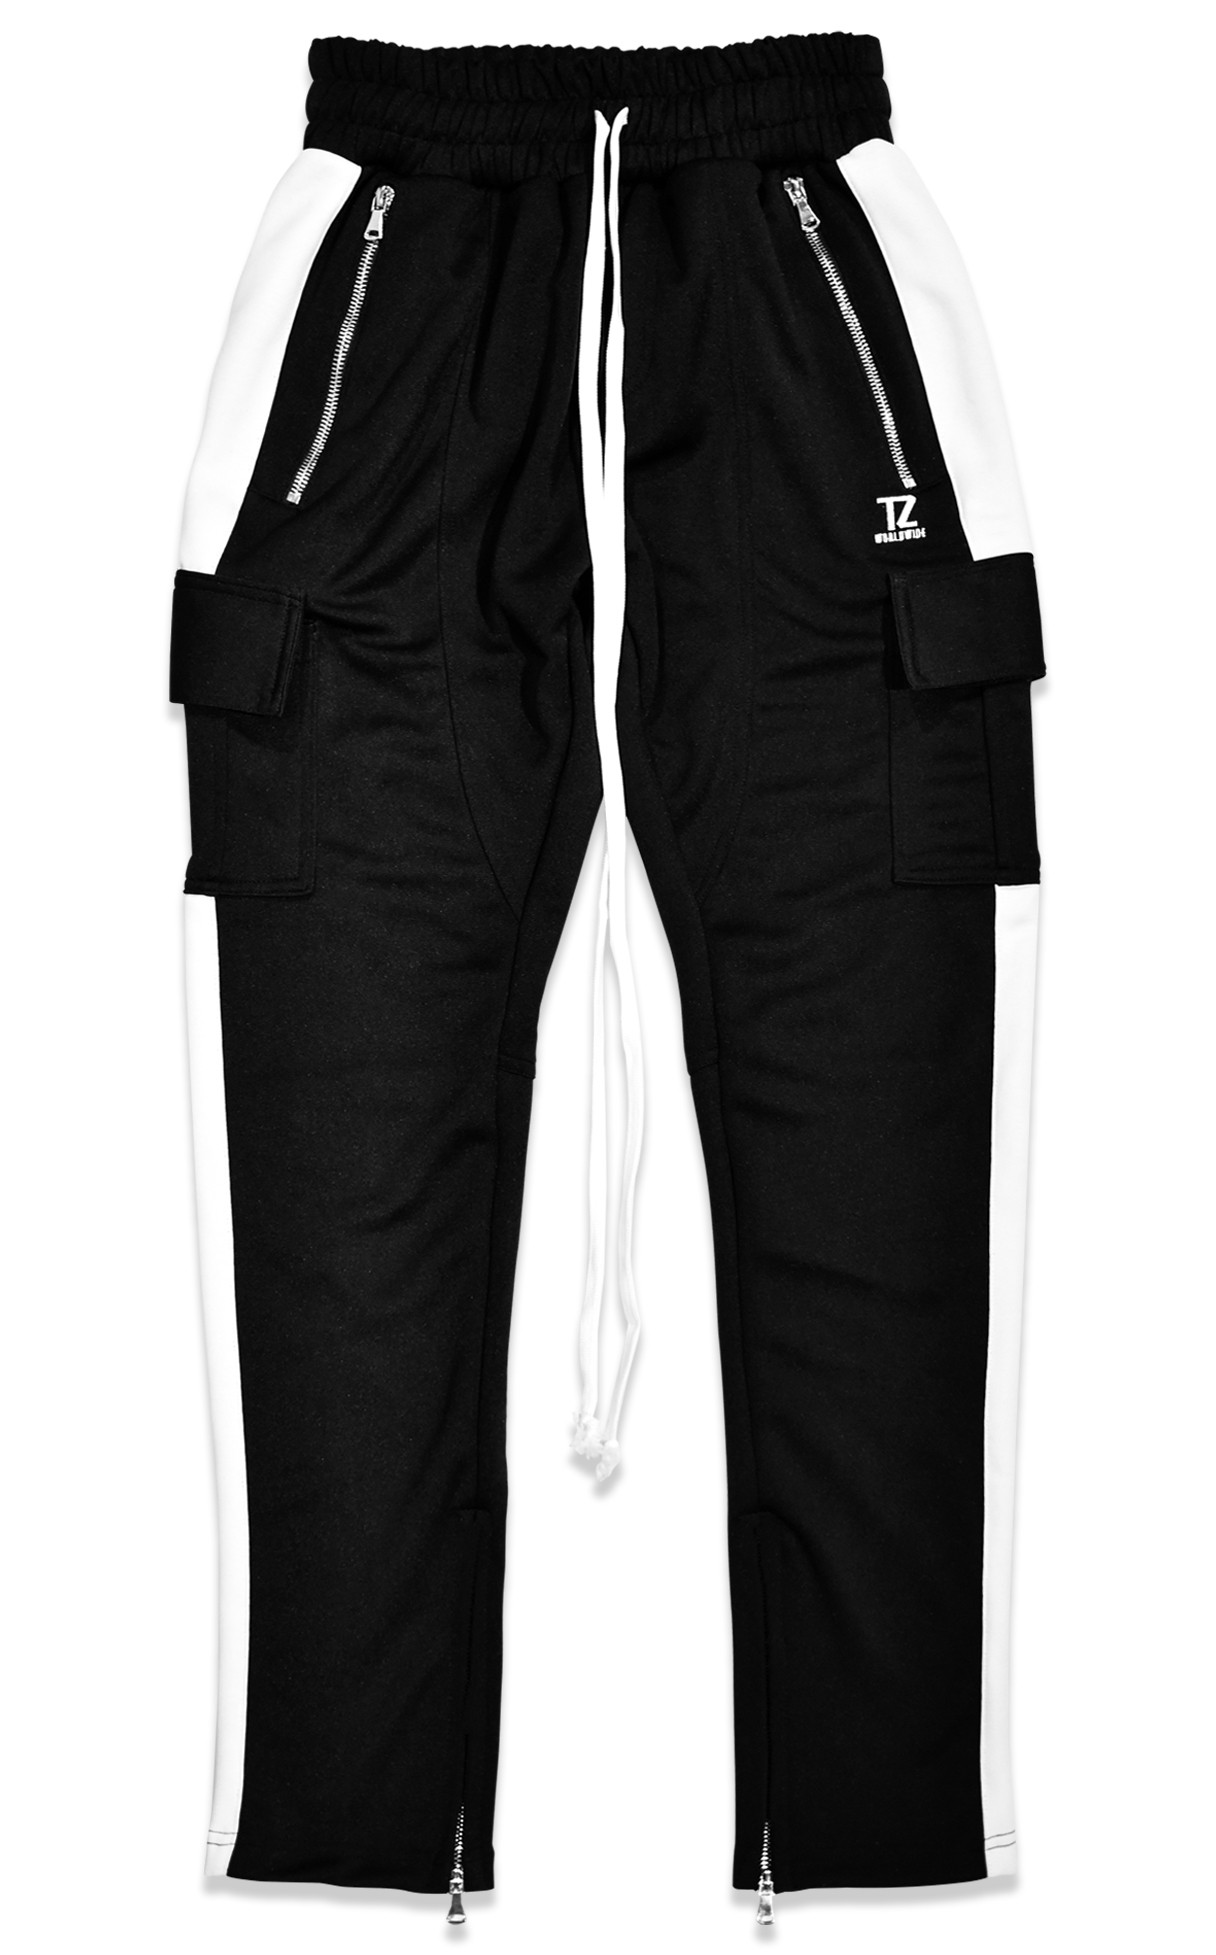 TZ Multiple Packet Track Pants (Black/White) Size XL